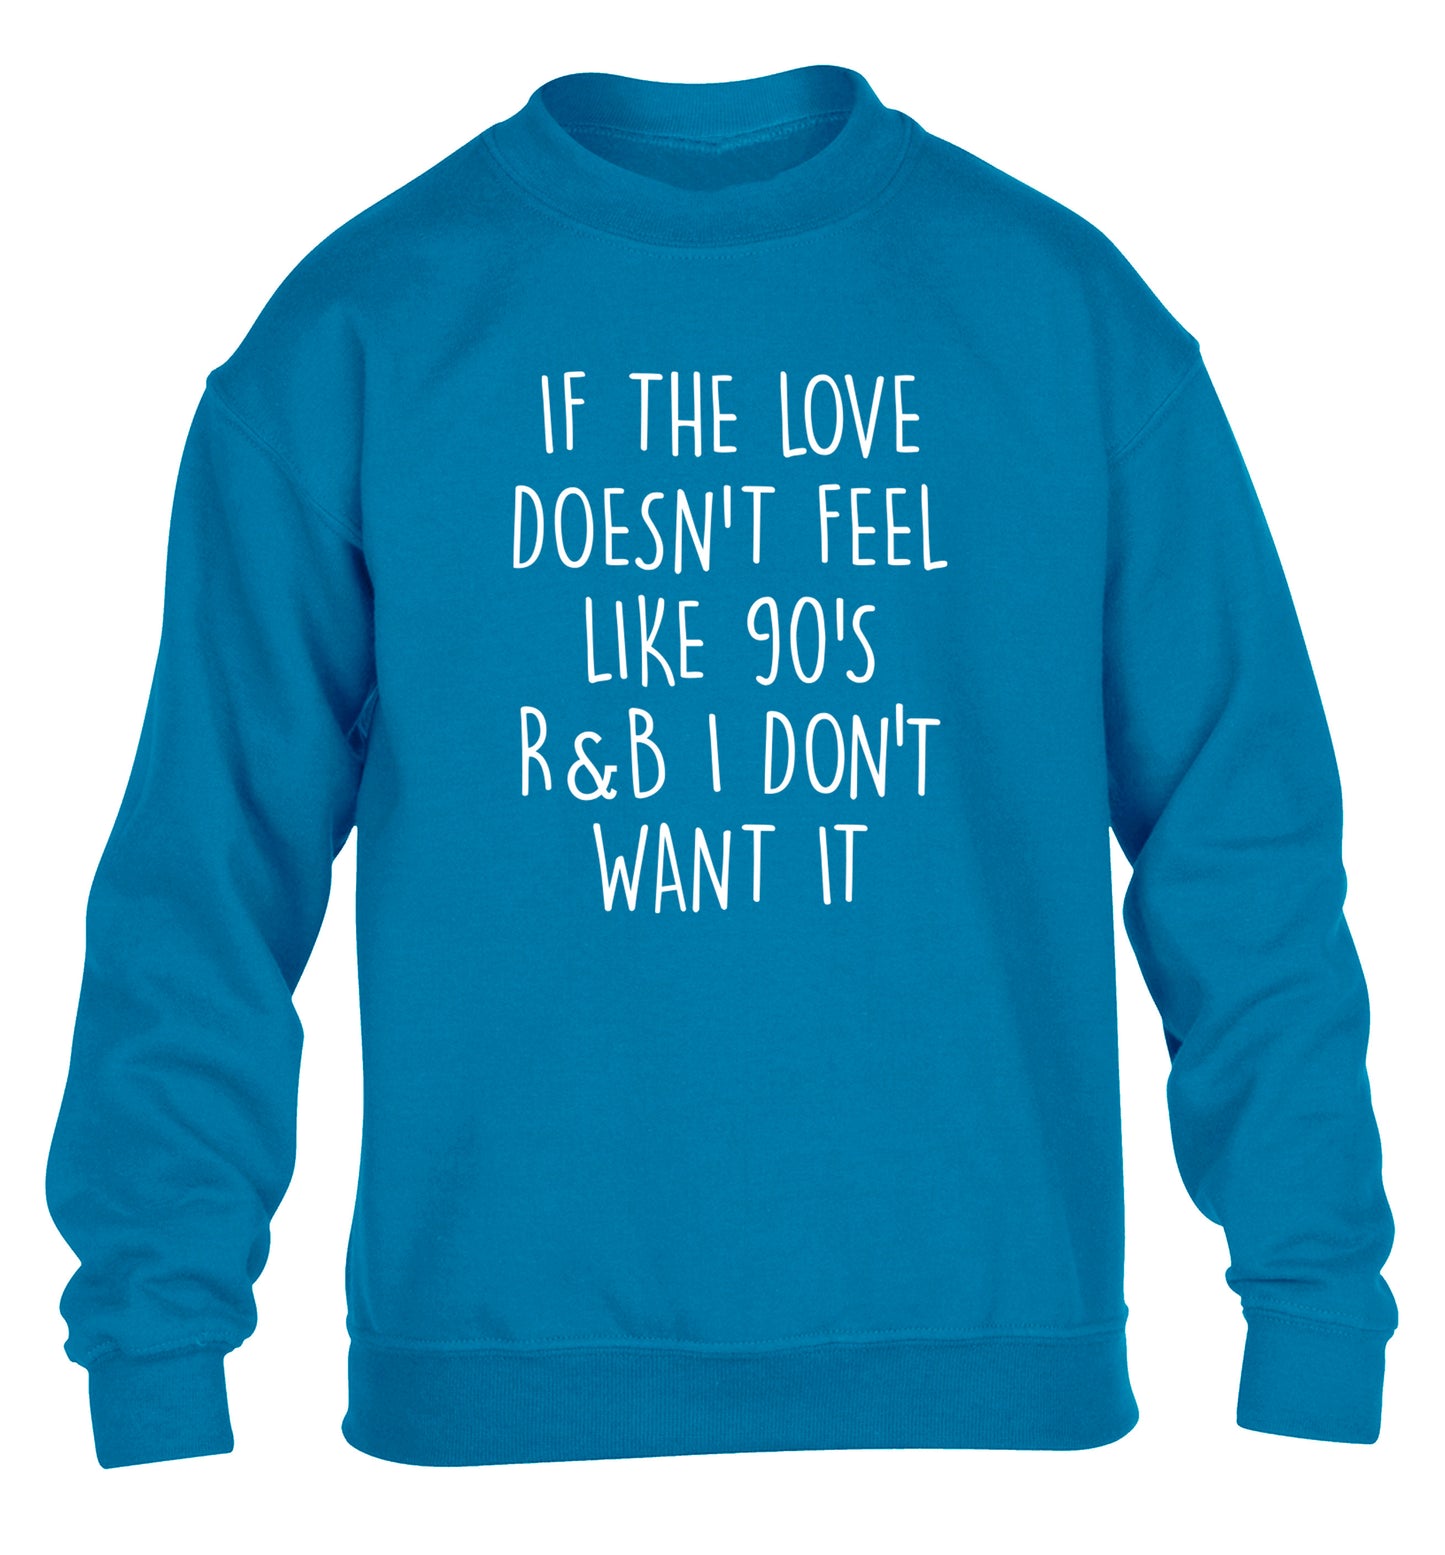 If the love doesn't feel like 90's R&B I don't want it children's blue sweater 12-14 Years